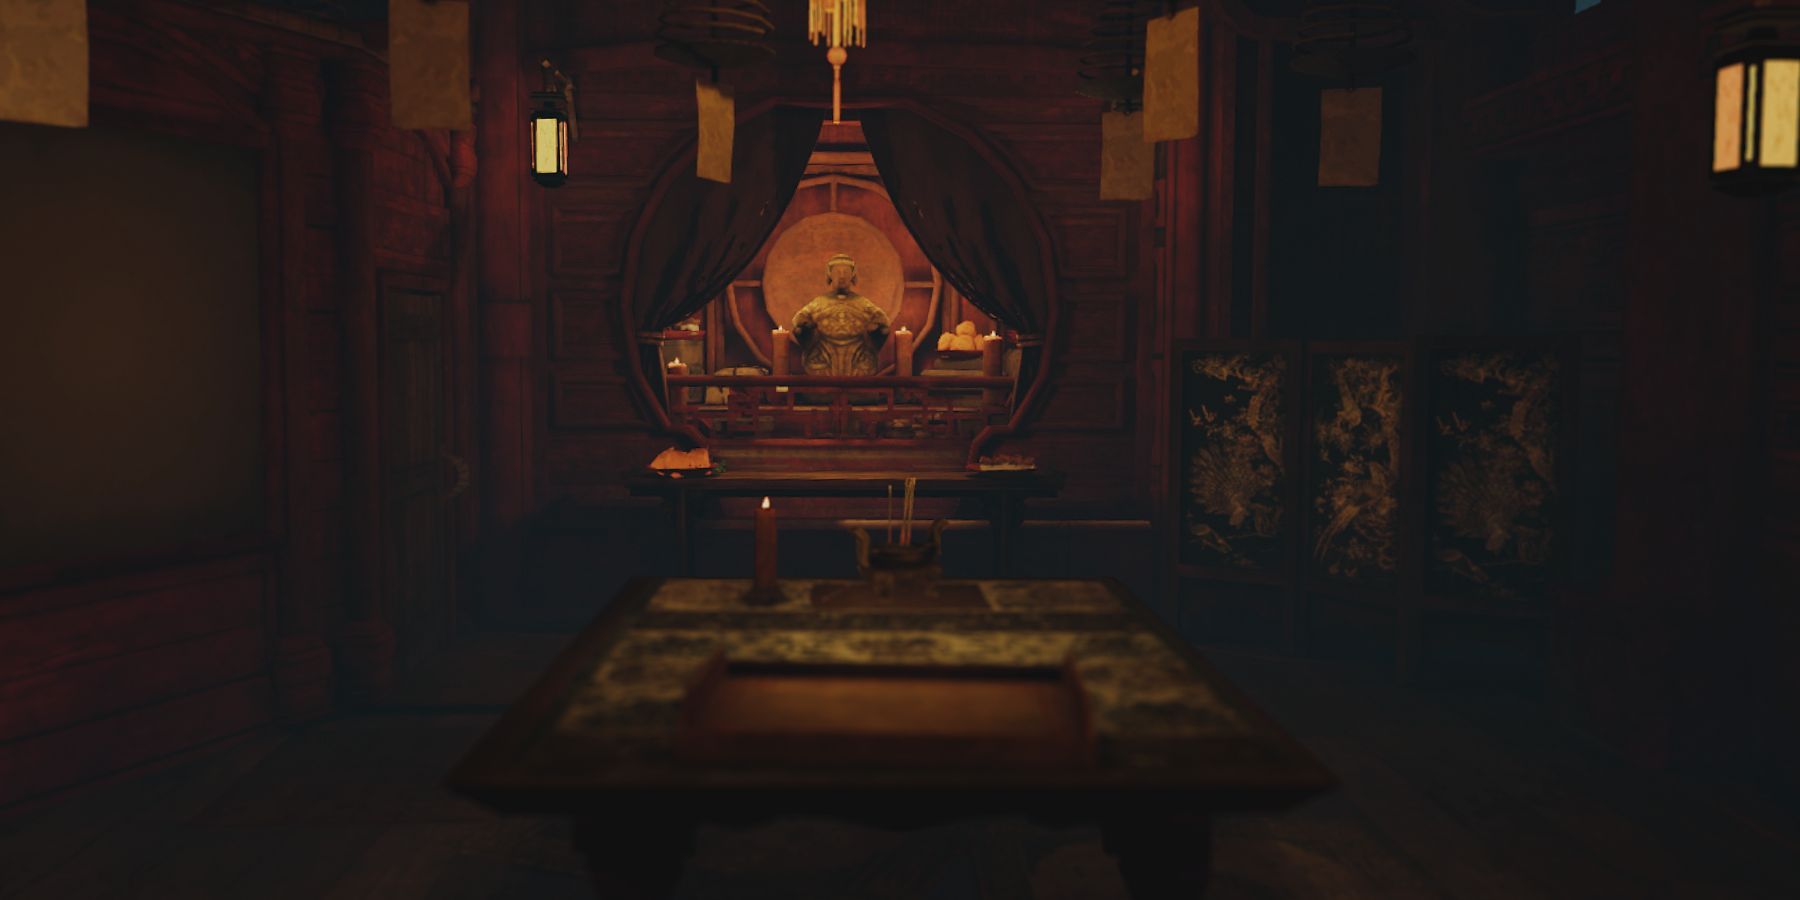 The Pirate Queen interior shrine